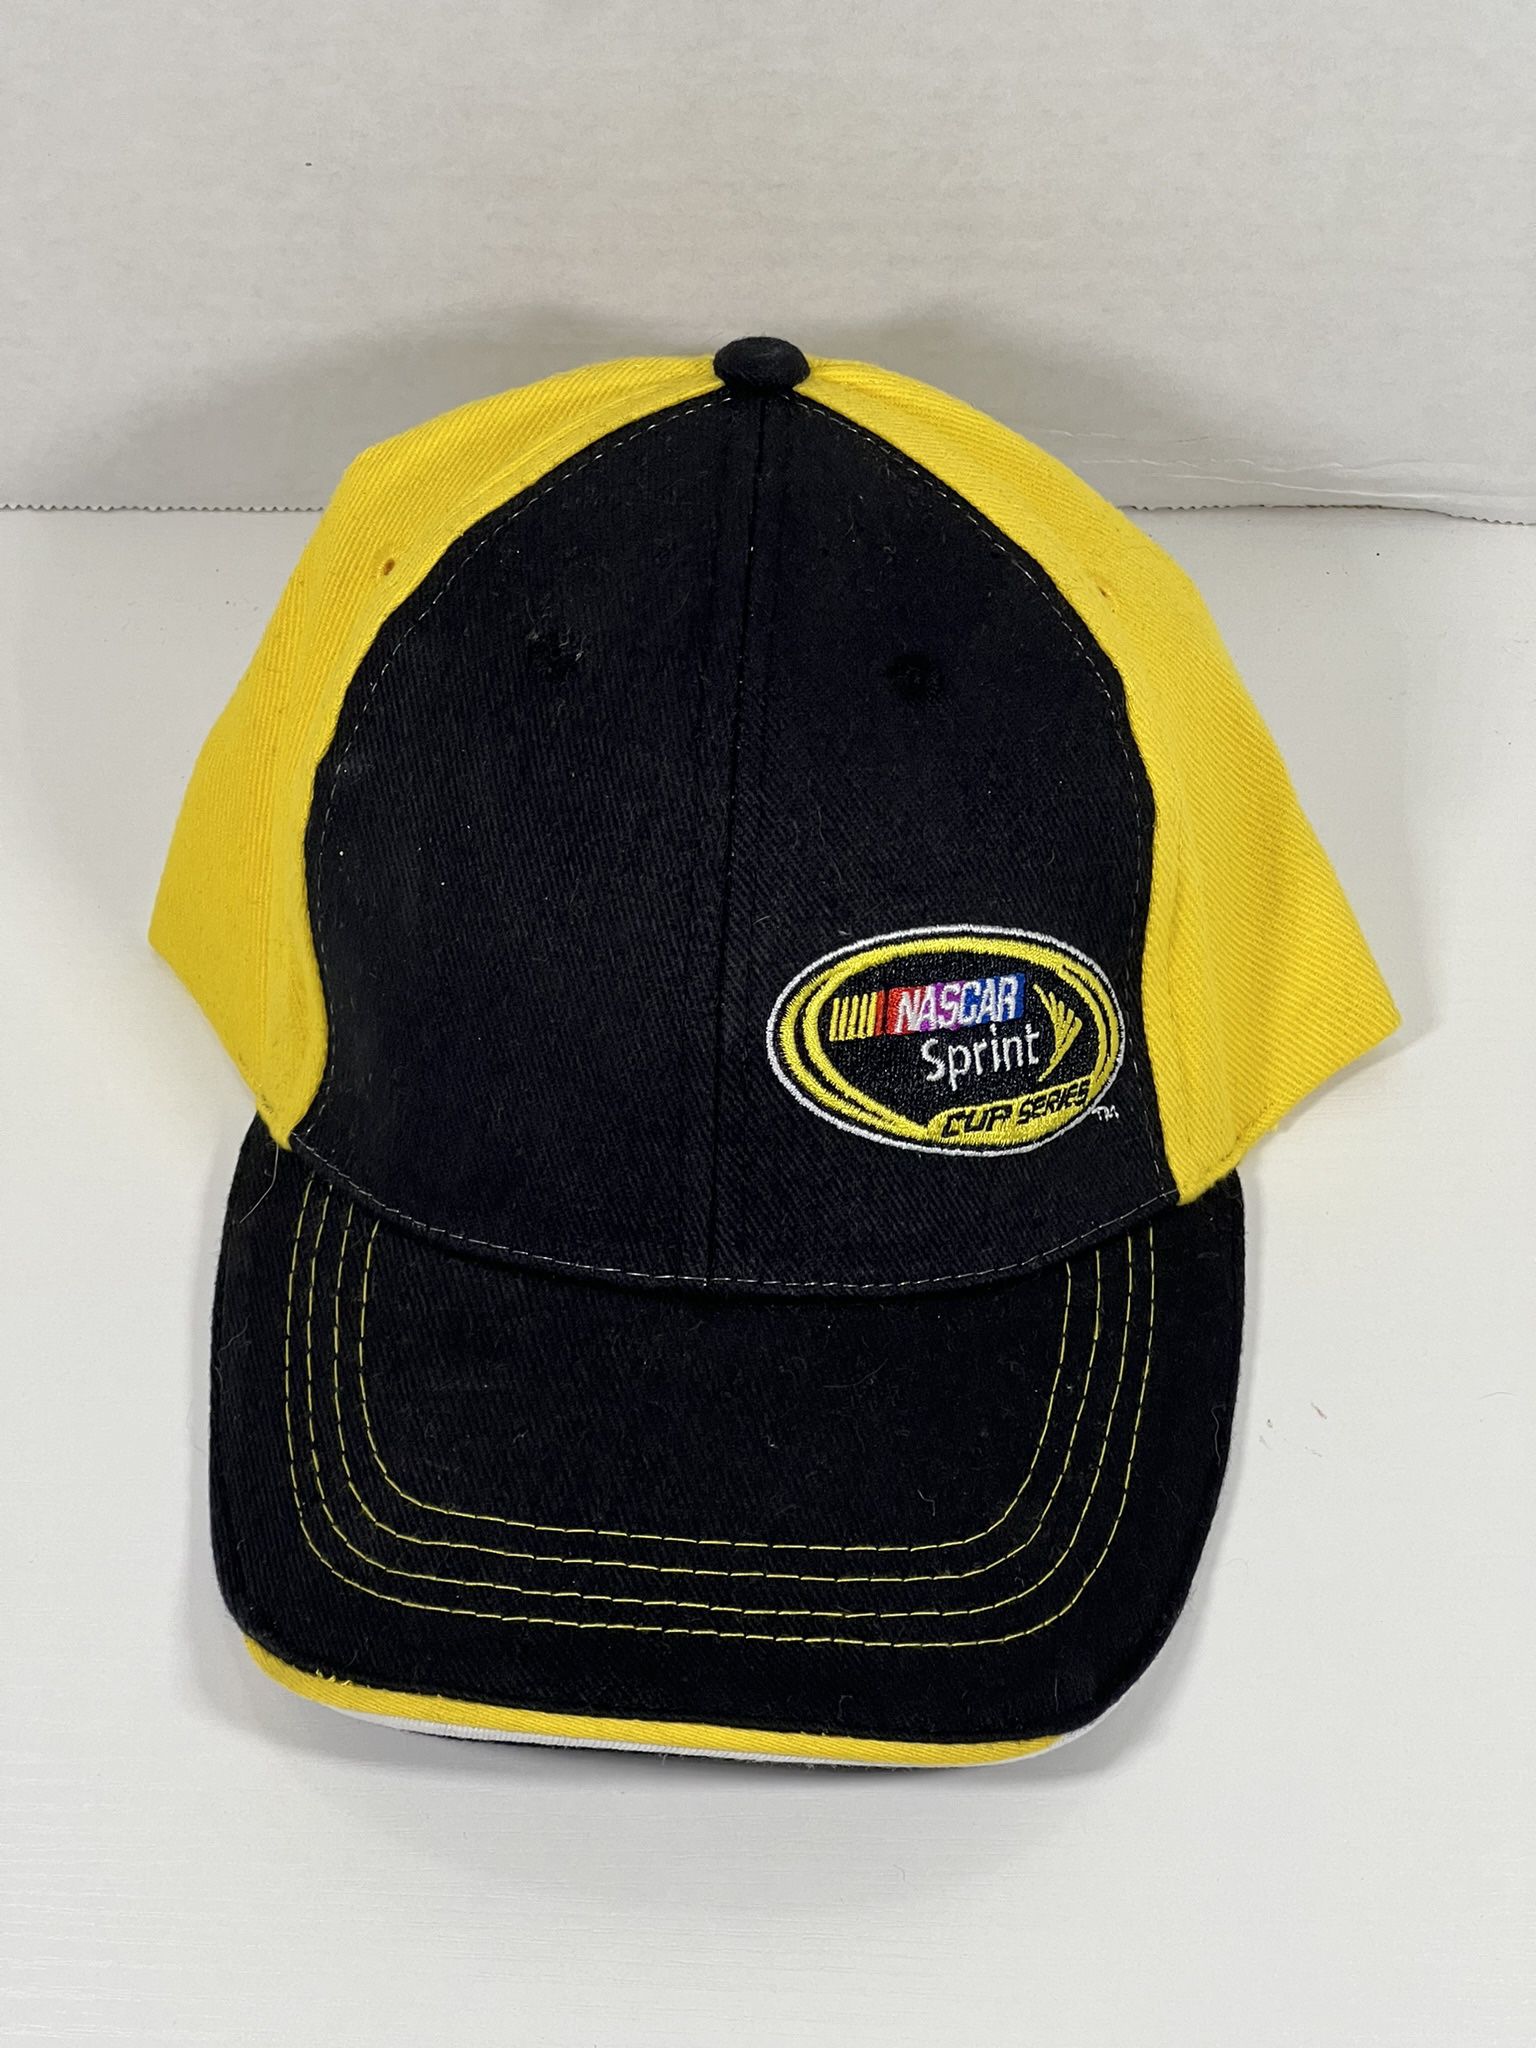 Nascar Racing Sprint Cup Series Baseball Cap Yellow and Black